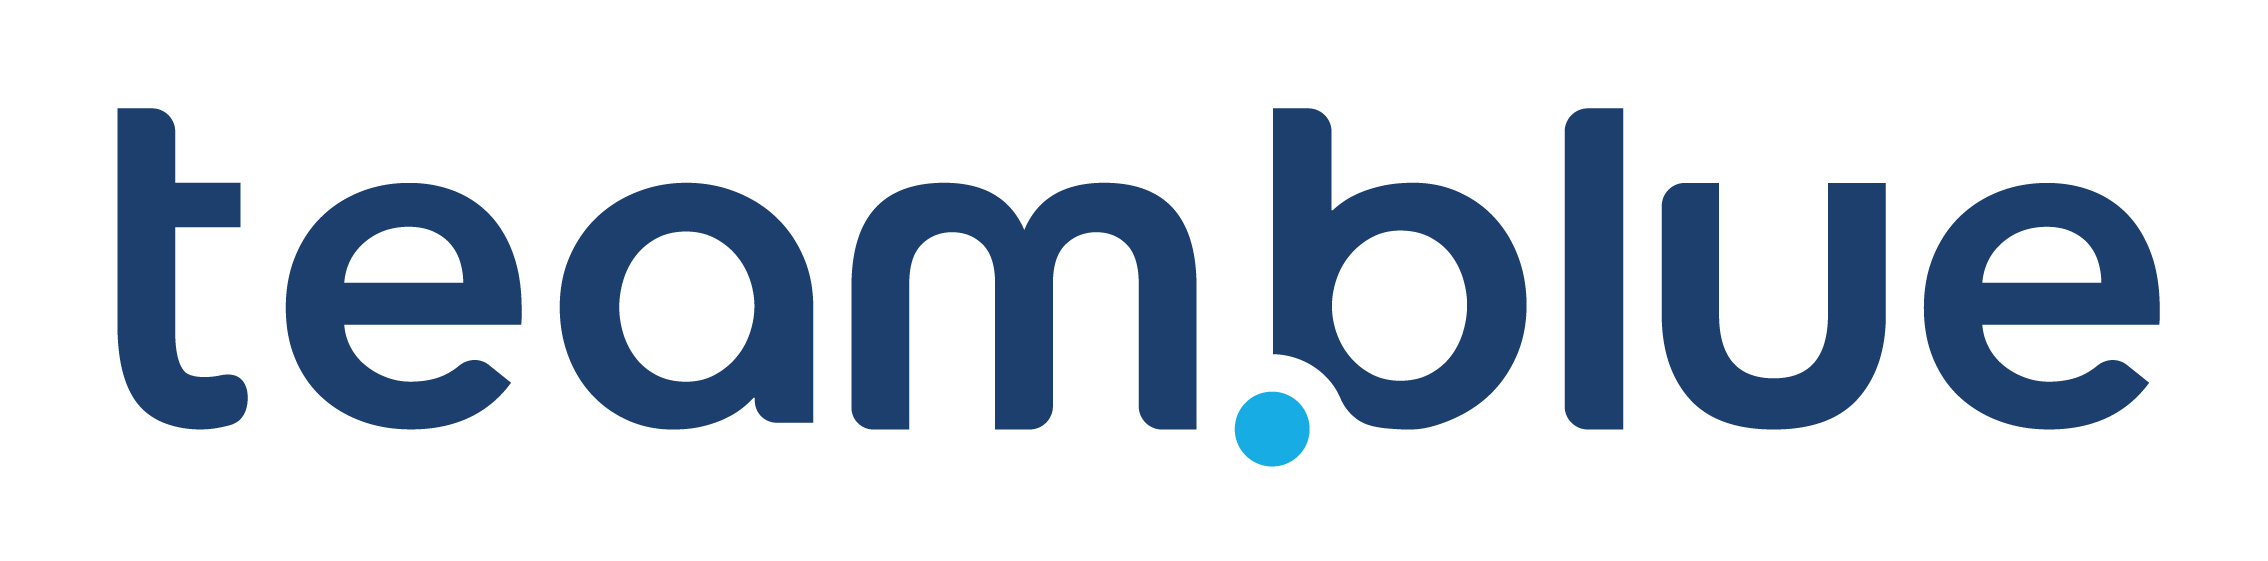 team.blue logo